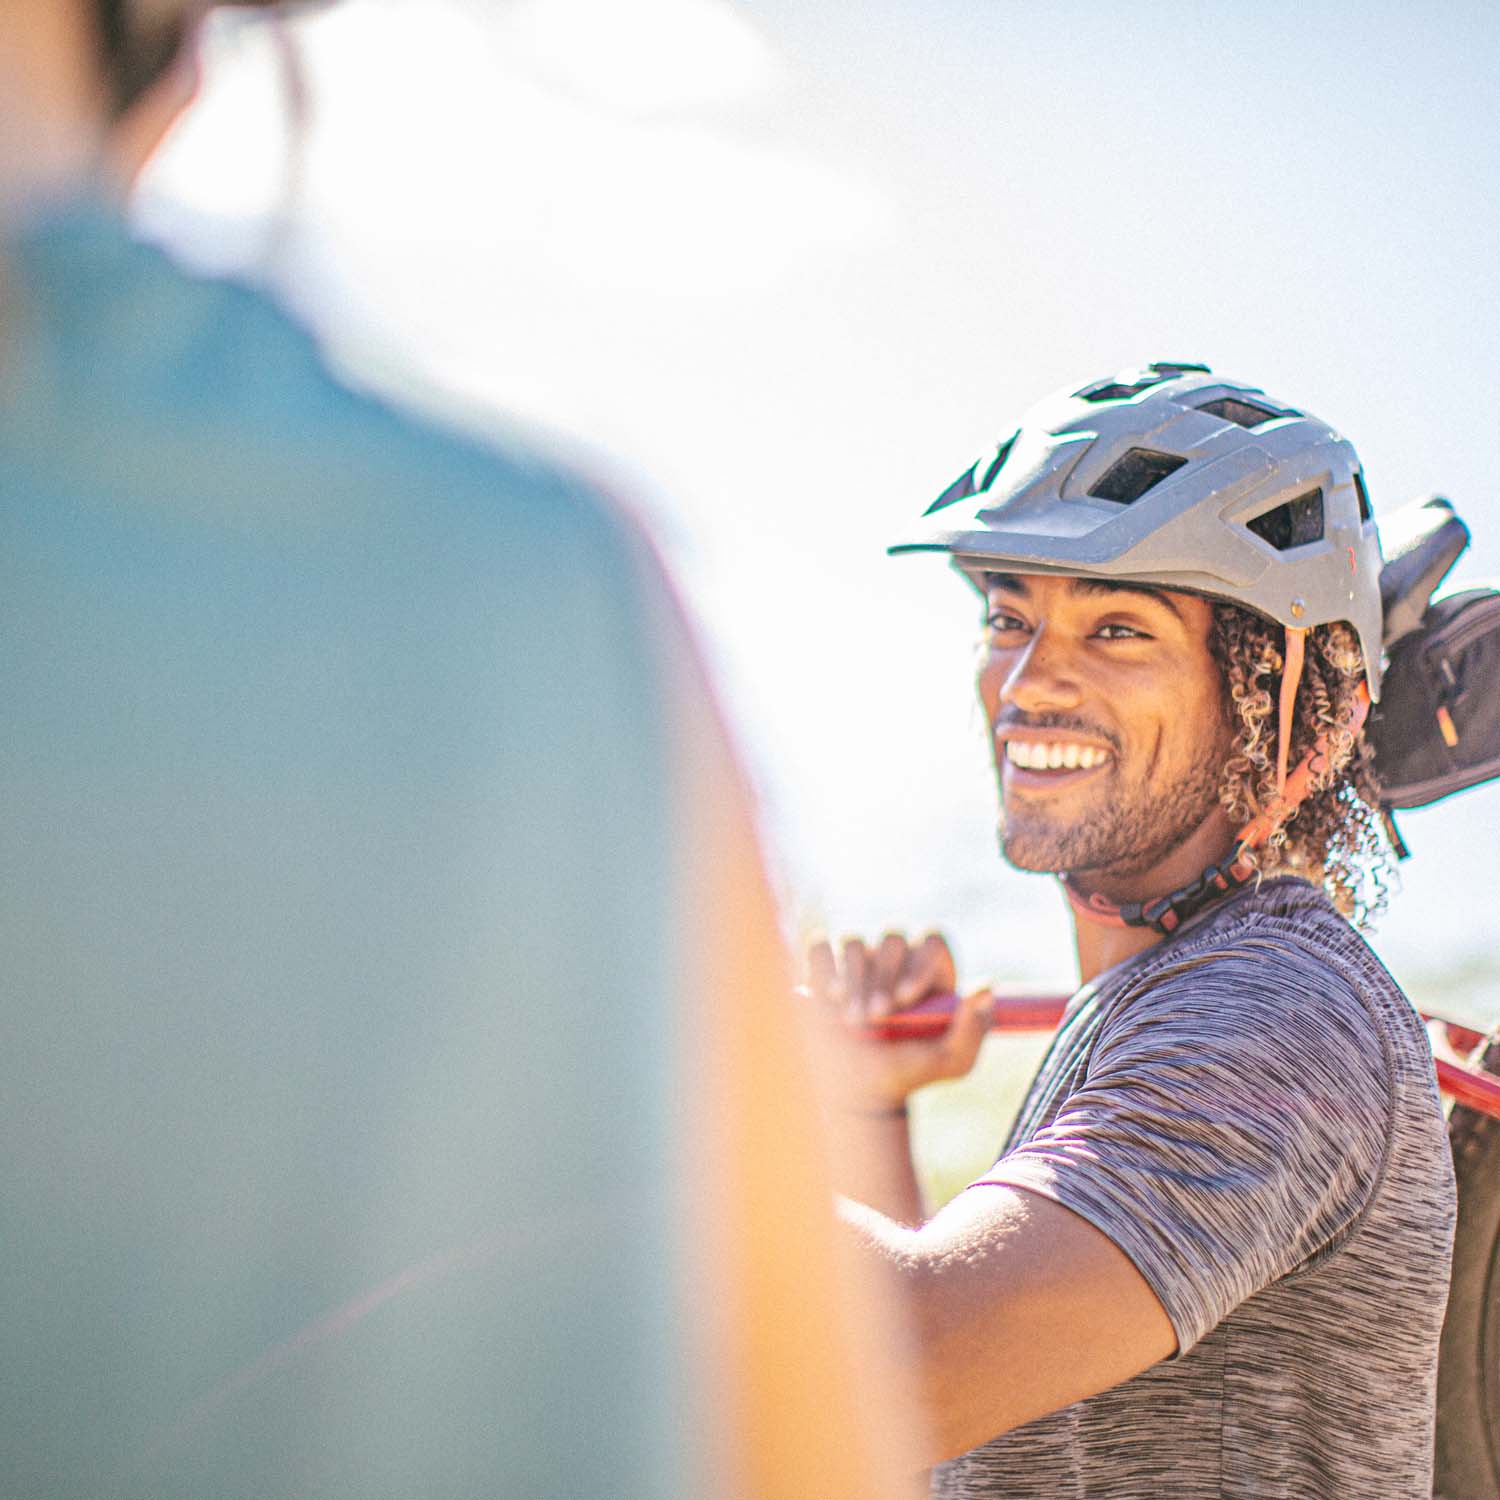 Male in helmet holding bike